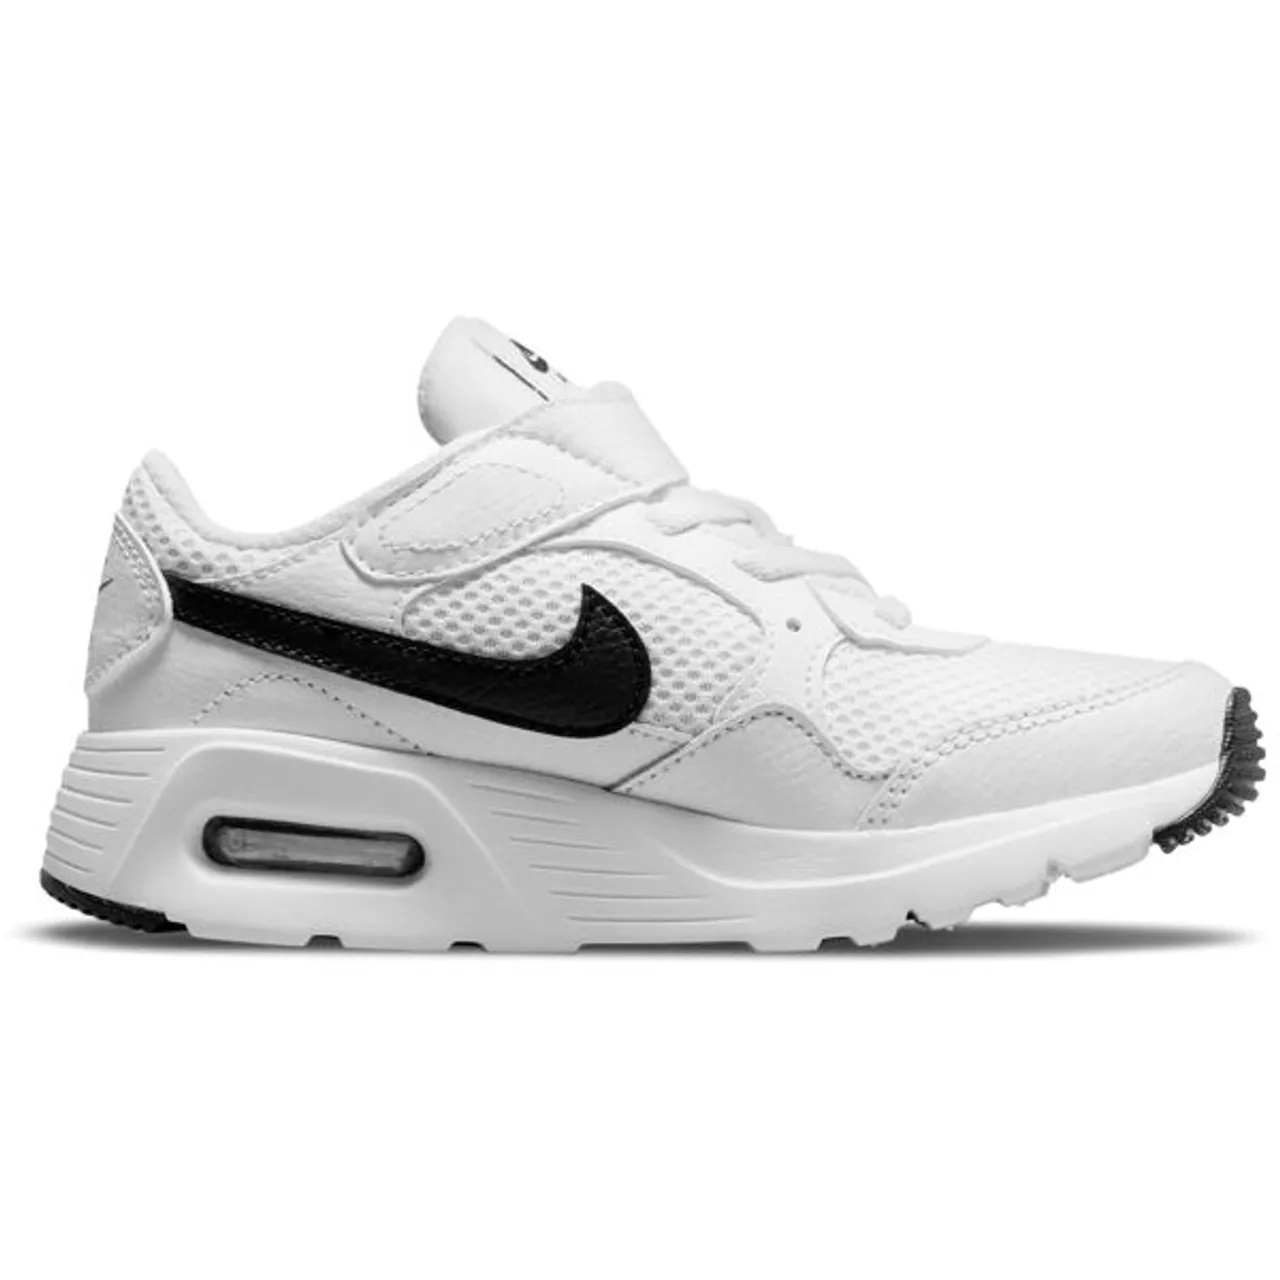 Sneaker NIKE SPORTSWEAR "AIR MAX SC (PS)" Gr. 32, schwarz-weiß (weiß, schwarz) Schuhe Laufschuhe